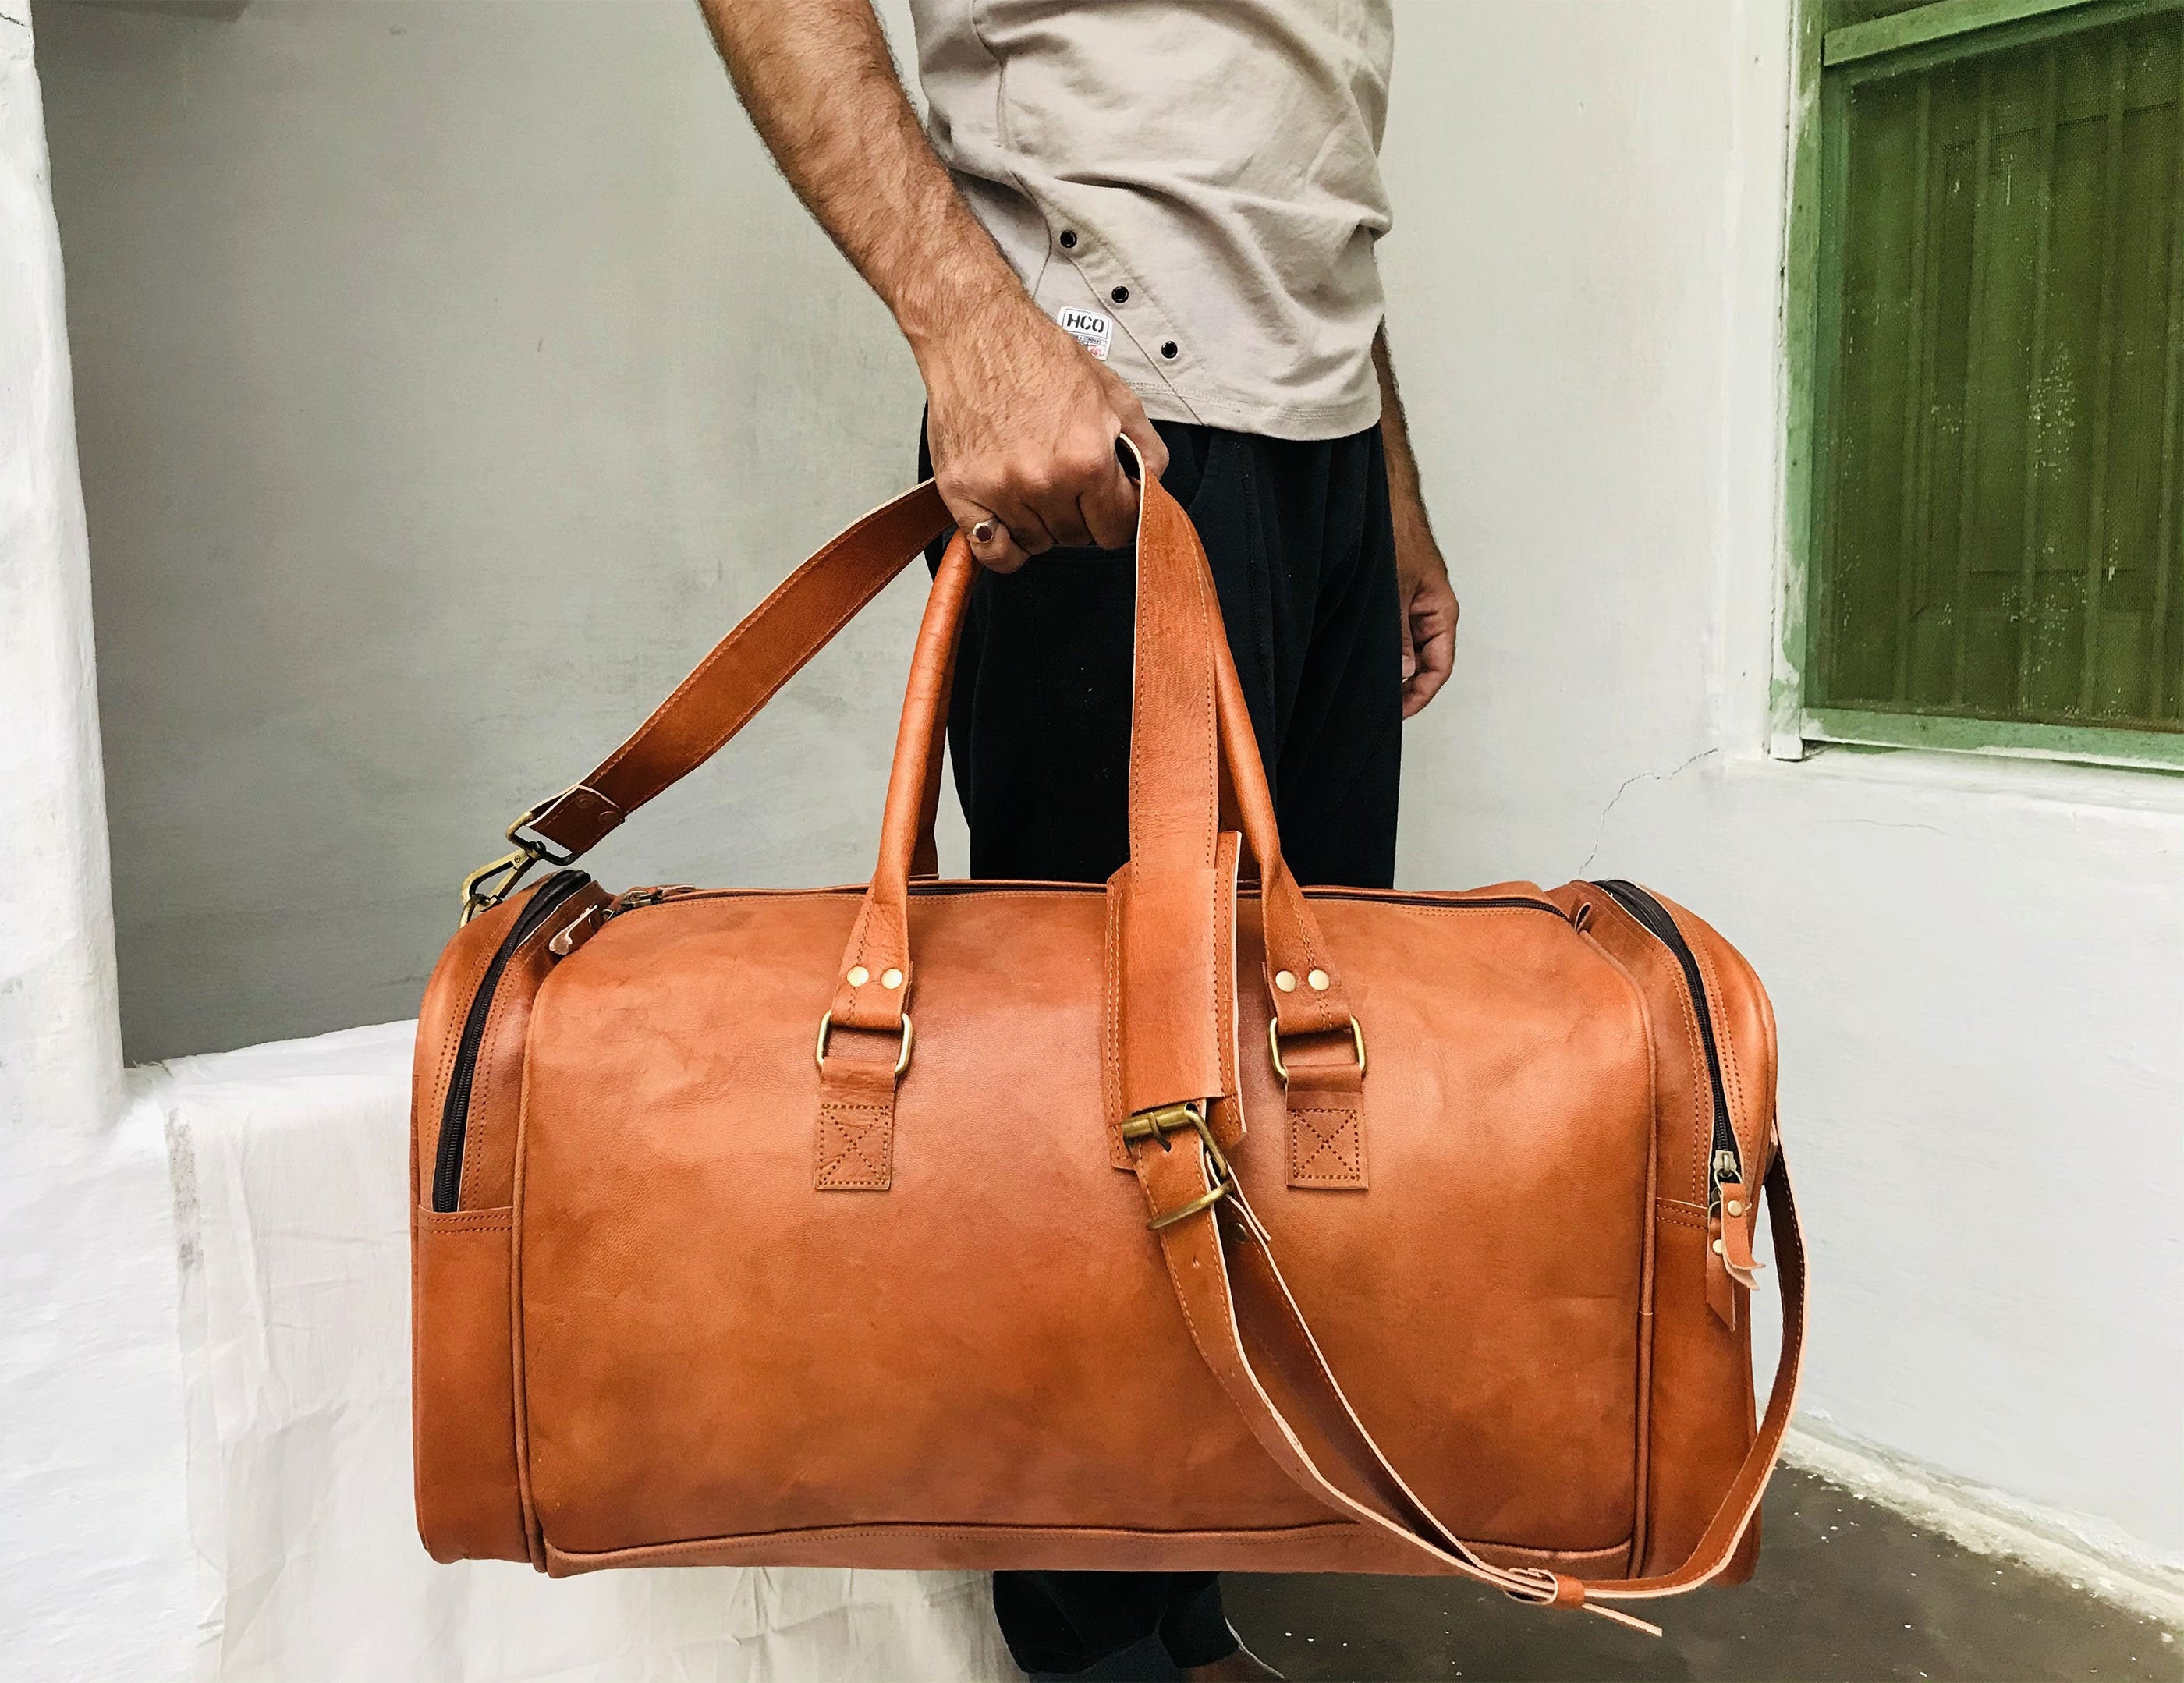 LeatherFocus Leather Travel Luggage Bag, Mens Duffle Retro Carry on Handbag (Brown)